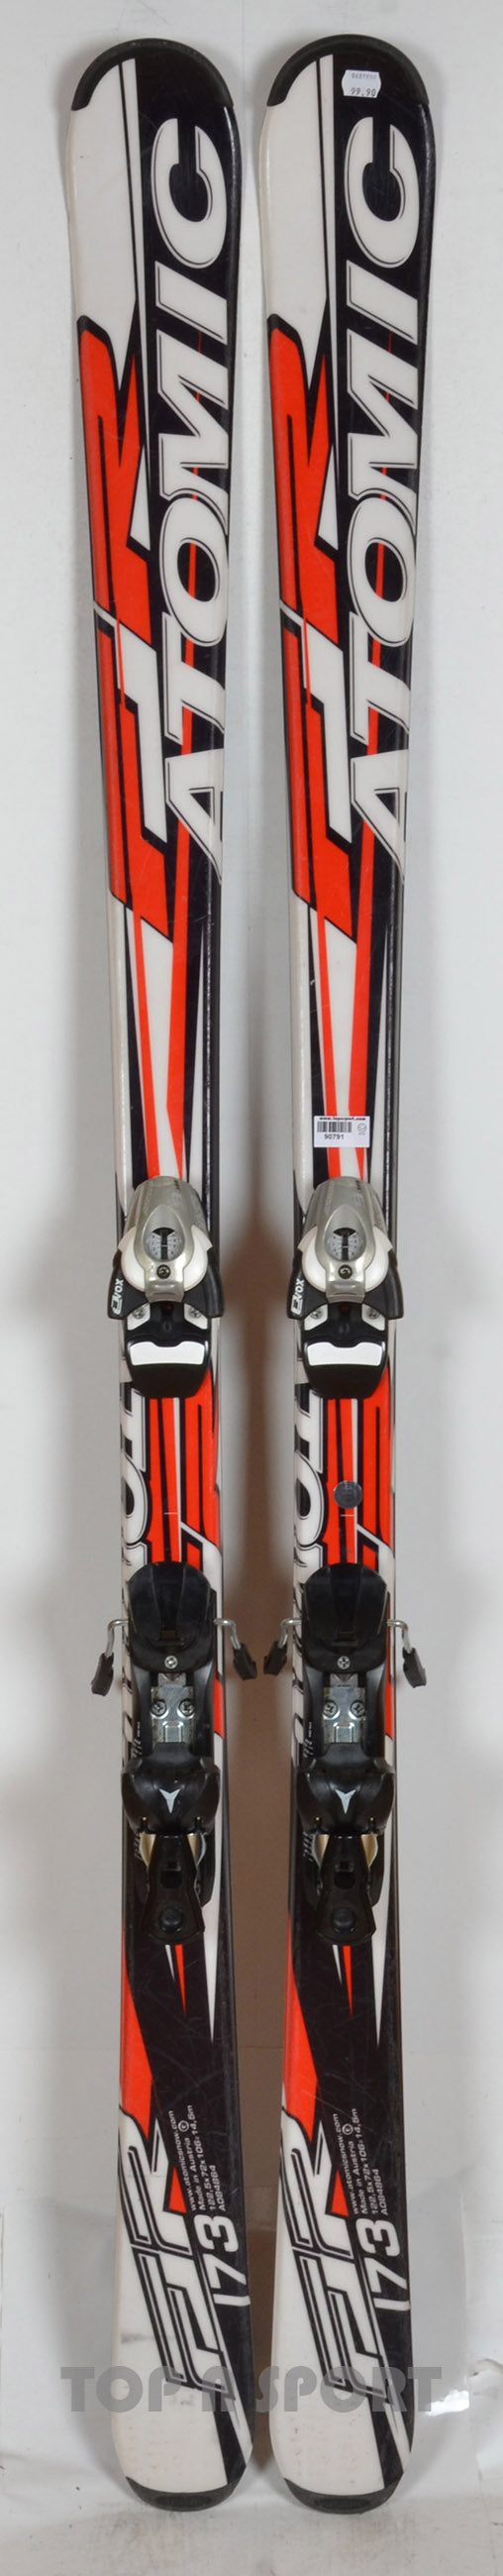 Atomic FR  - skis d'occasion